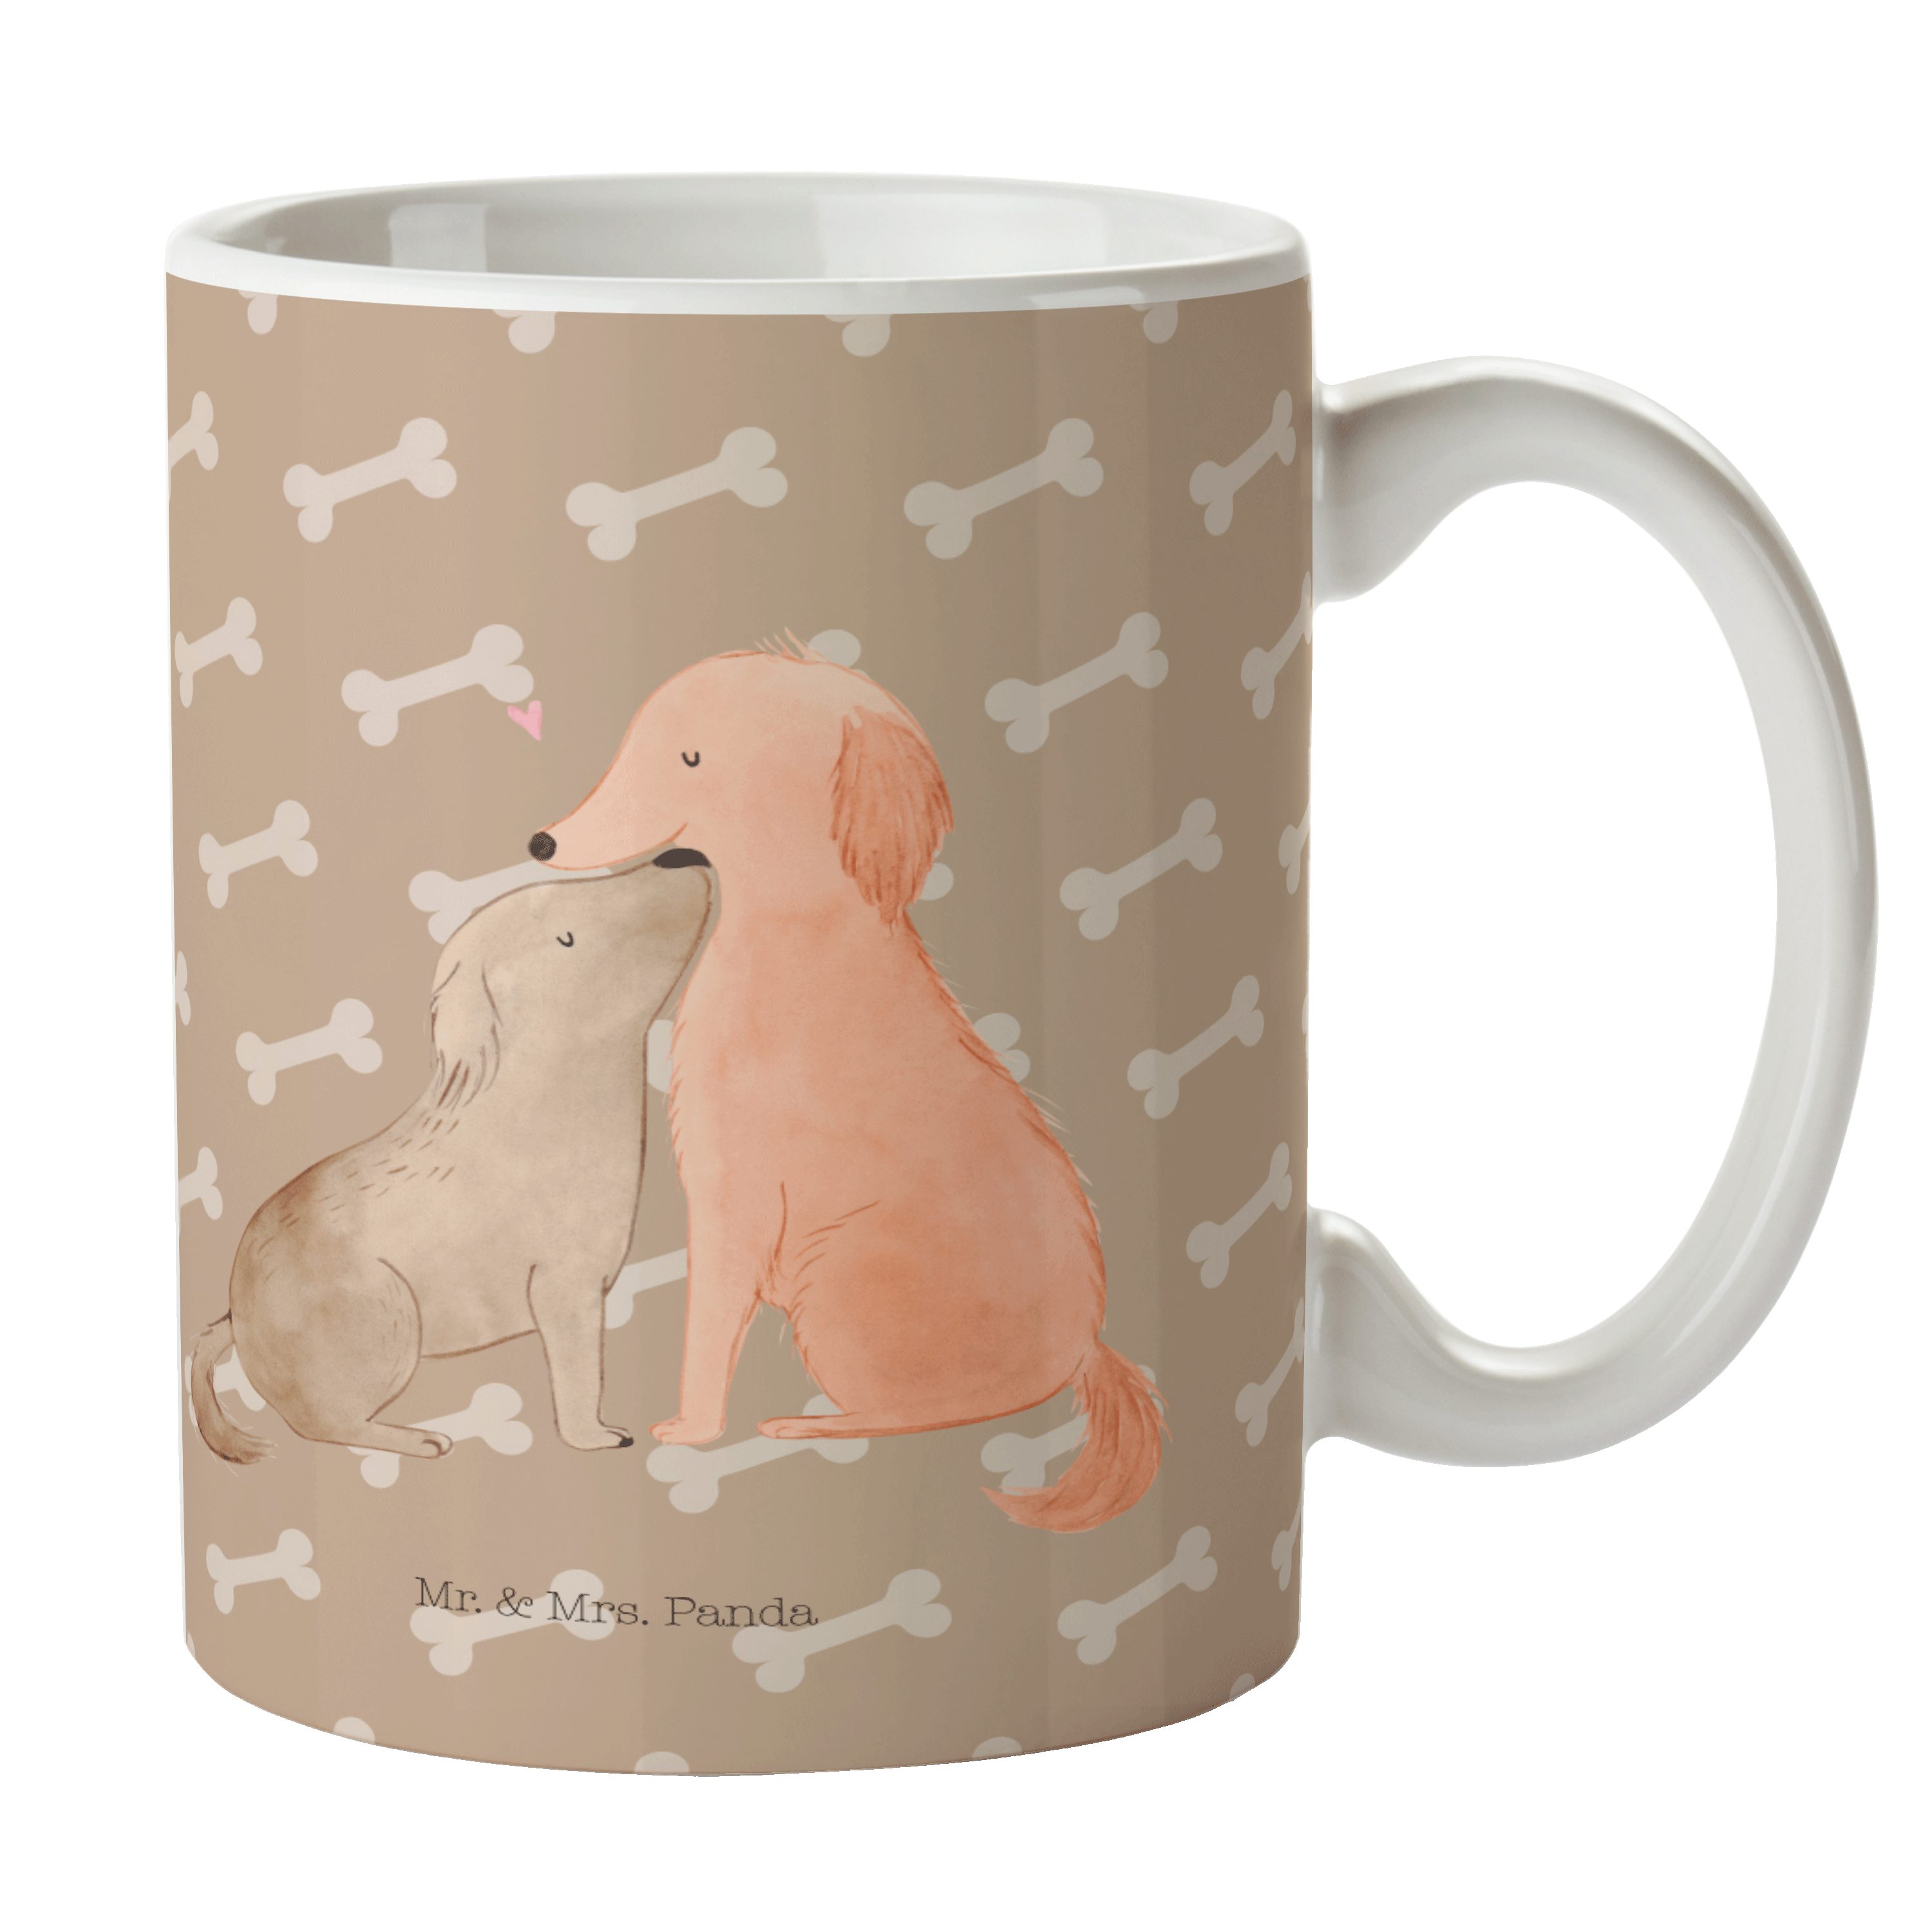 Mr. & Mrs. Panda Tasse - Geschenk, Hunde Kaffeebecher, Tasse, Liebe Hundeglück Hunderasse, Keramik 